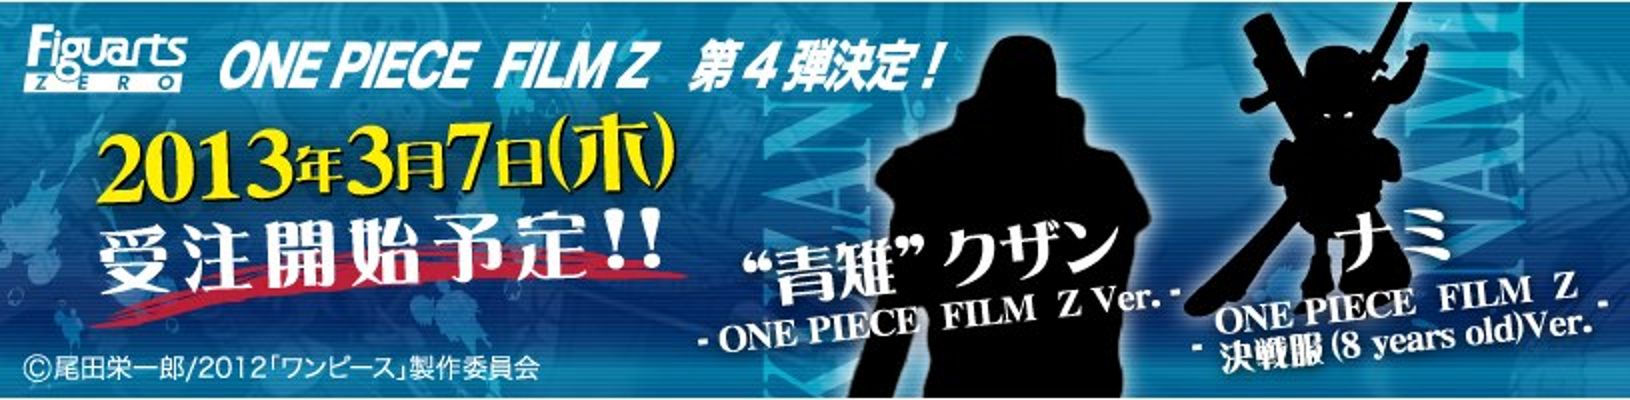 FiguartsZERO ONE PIECE FILM Z ナミ 决戦服（8 years old）Ver. 